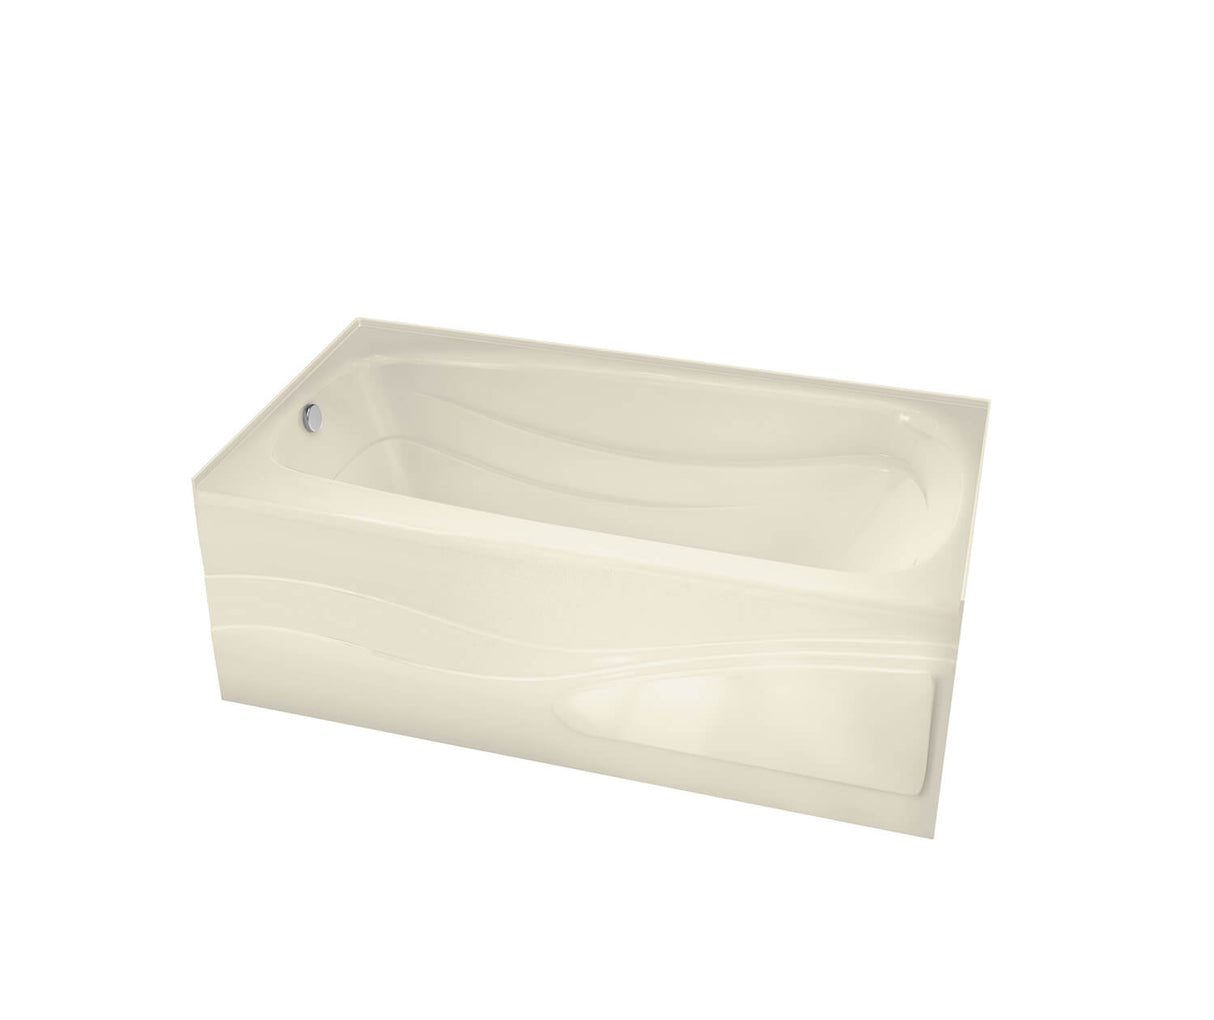 MAAX 102201-R-097-004 Tenderness 6032 Acrylic Alcove Right-Hand Drain Combined Whirlpool & Aeroeffect Bathtub in Bone